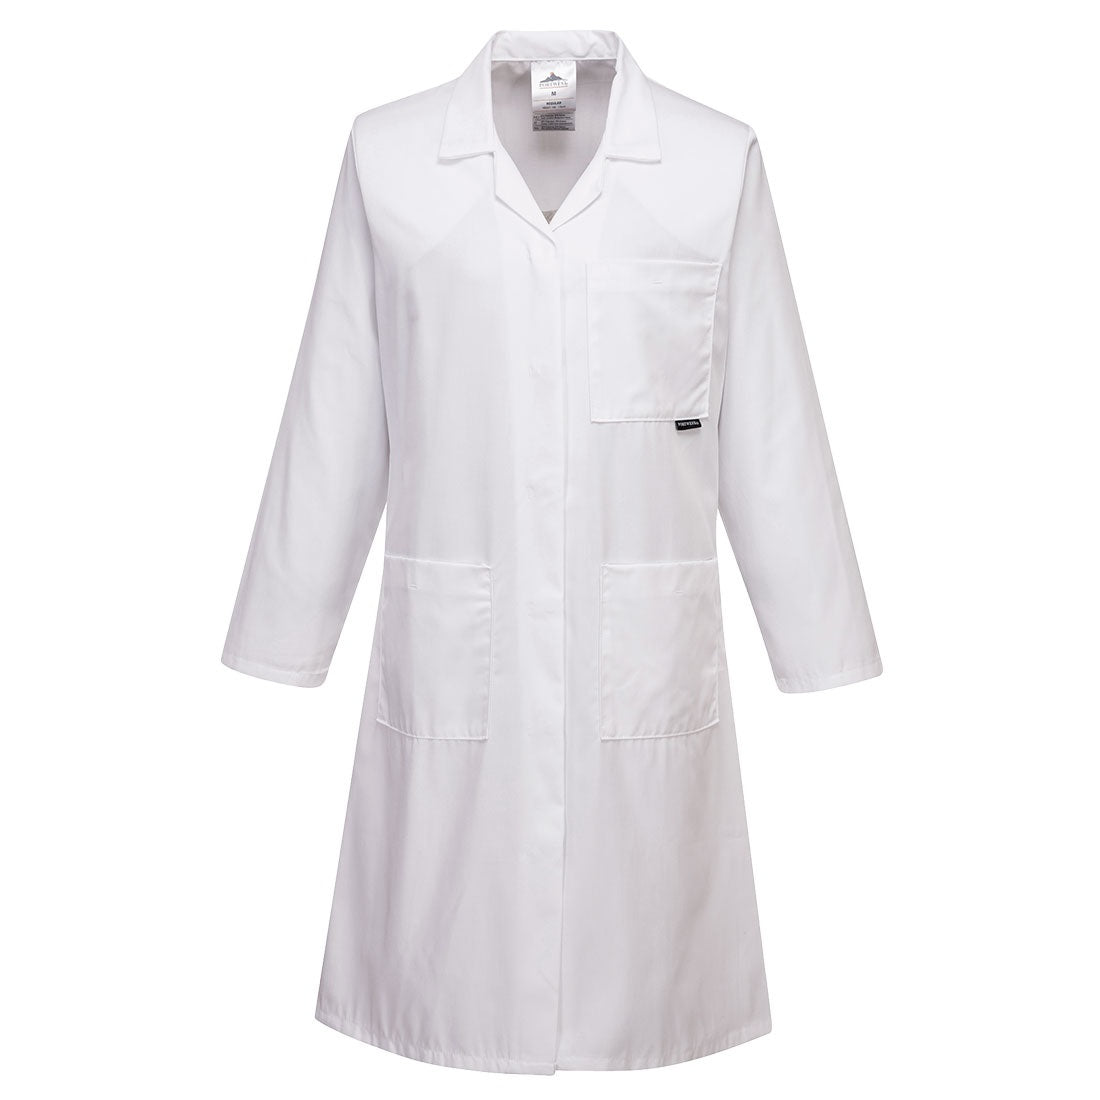 Portwest Women's Standard Lab Coat White - LW63